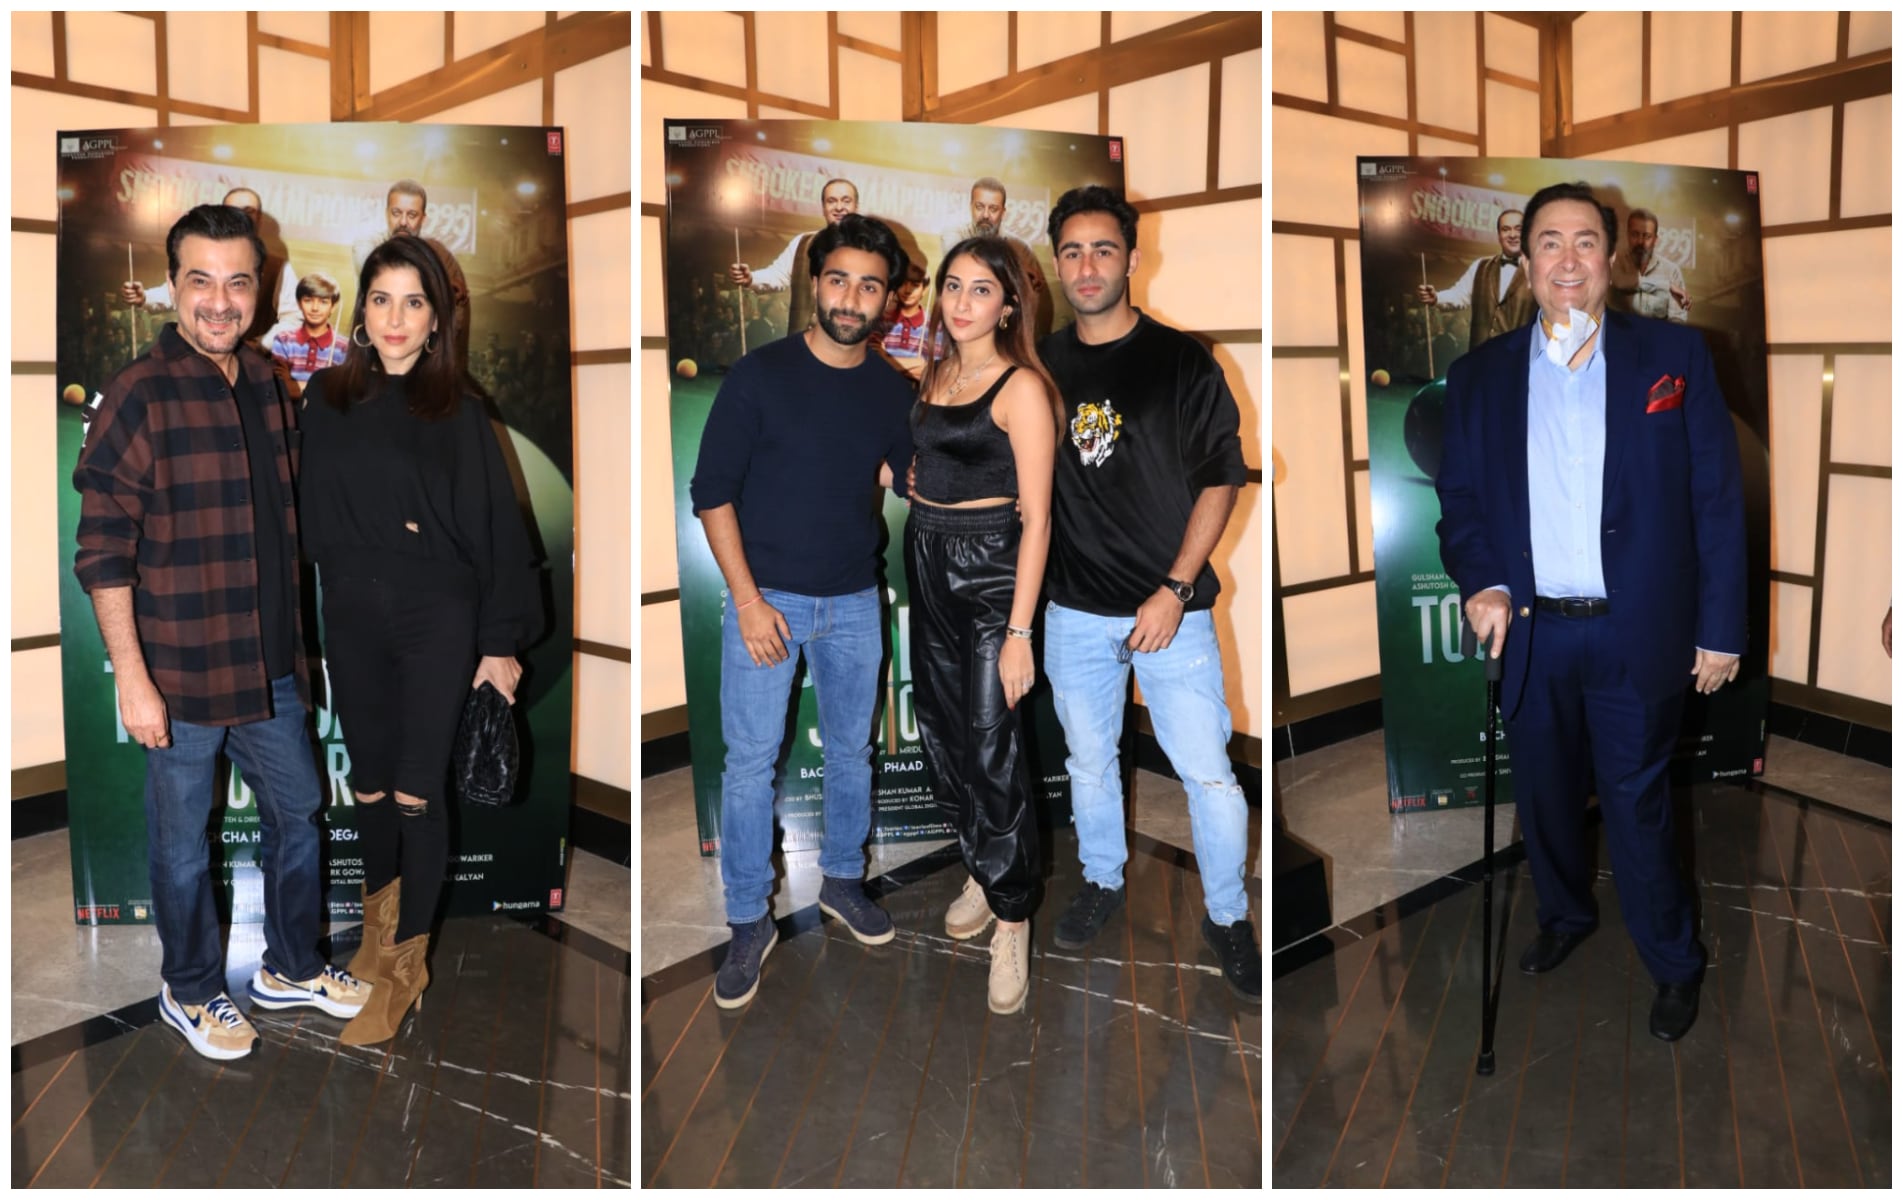 Sanjay Kapoor, Maheep Kapoor, Armaan Jain, Aadar Jain, Anissa Malhotra and Randhir Kapoor were also seen at the screening.